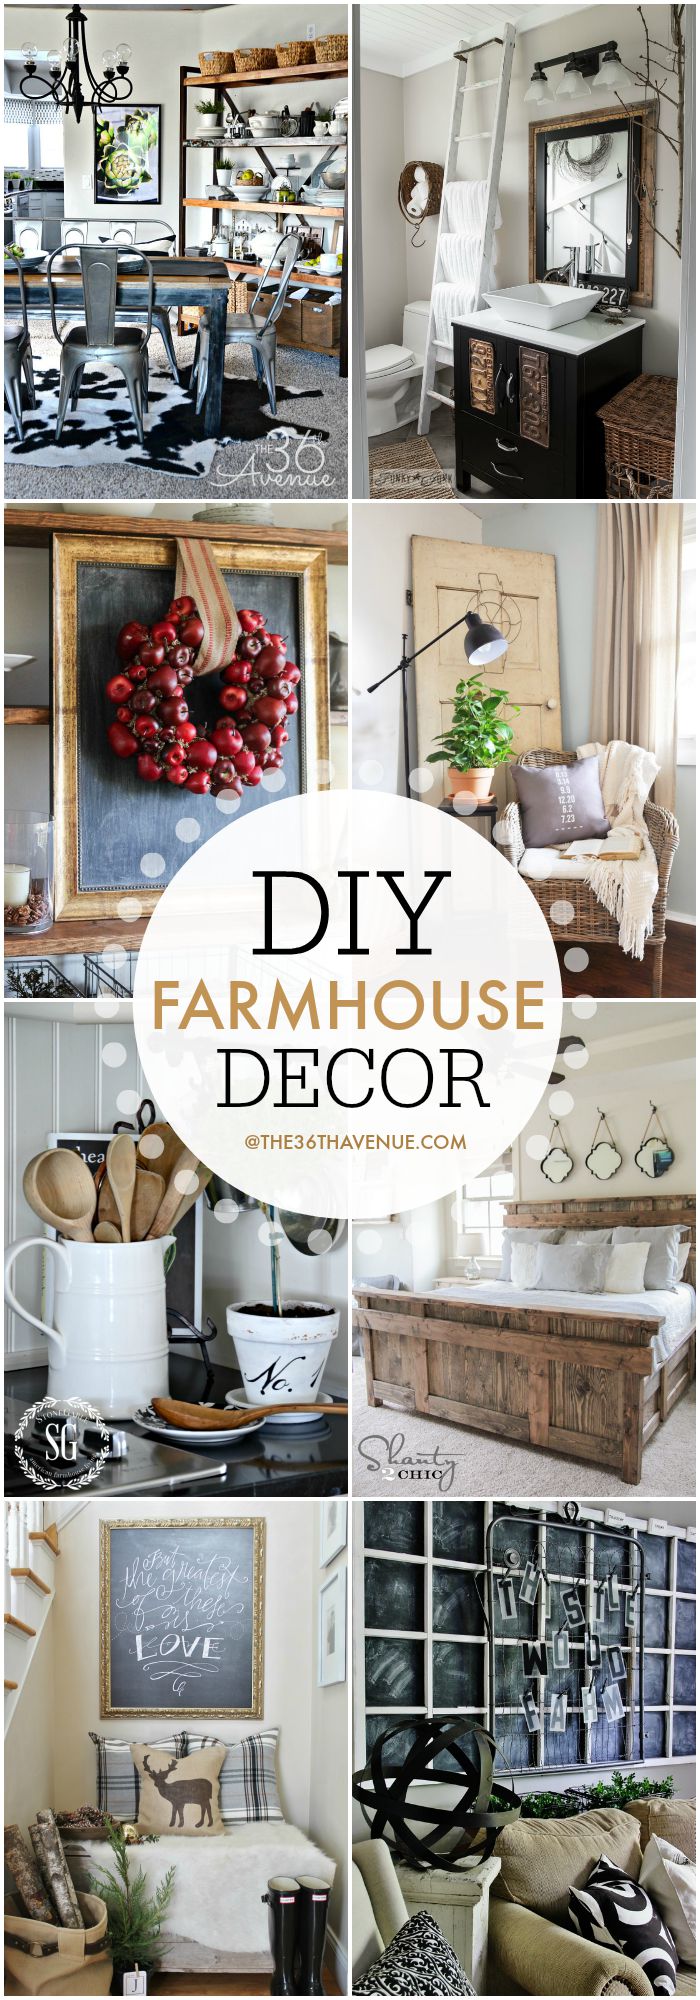 DIY Farmhouse Decor at the36thavenue.com